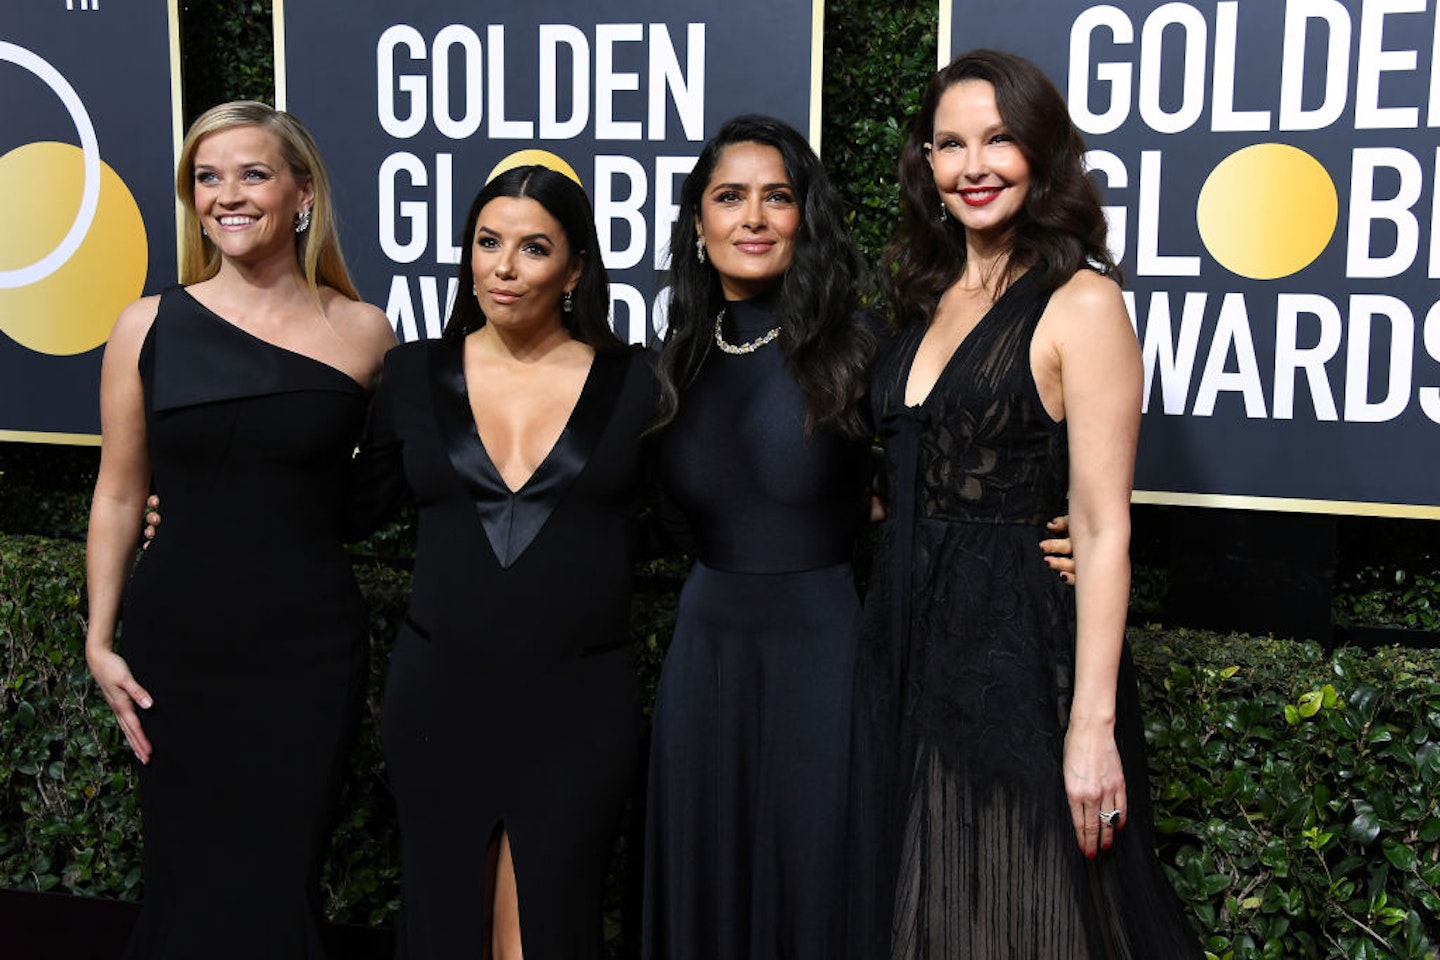 Reese Witherspoon, Eva Longoria, Salma Hayek and Ashley Judd